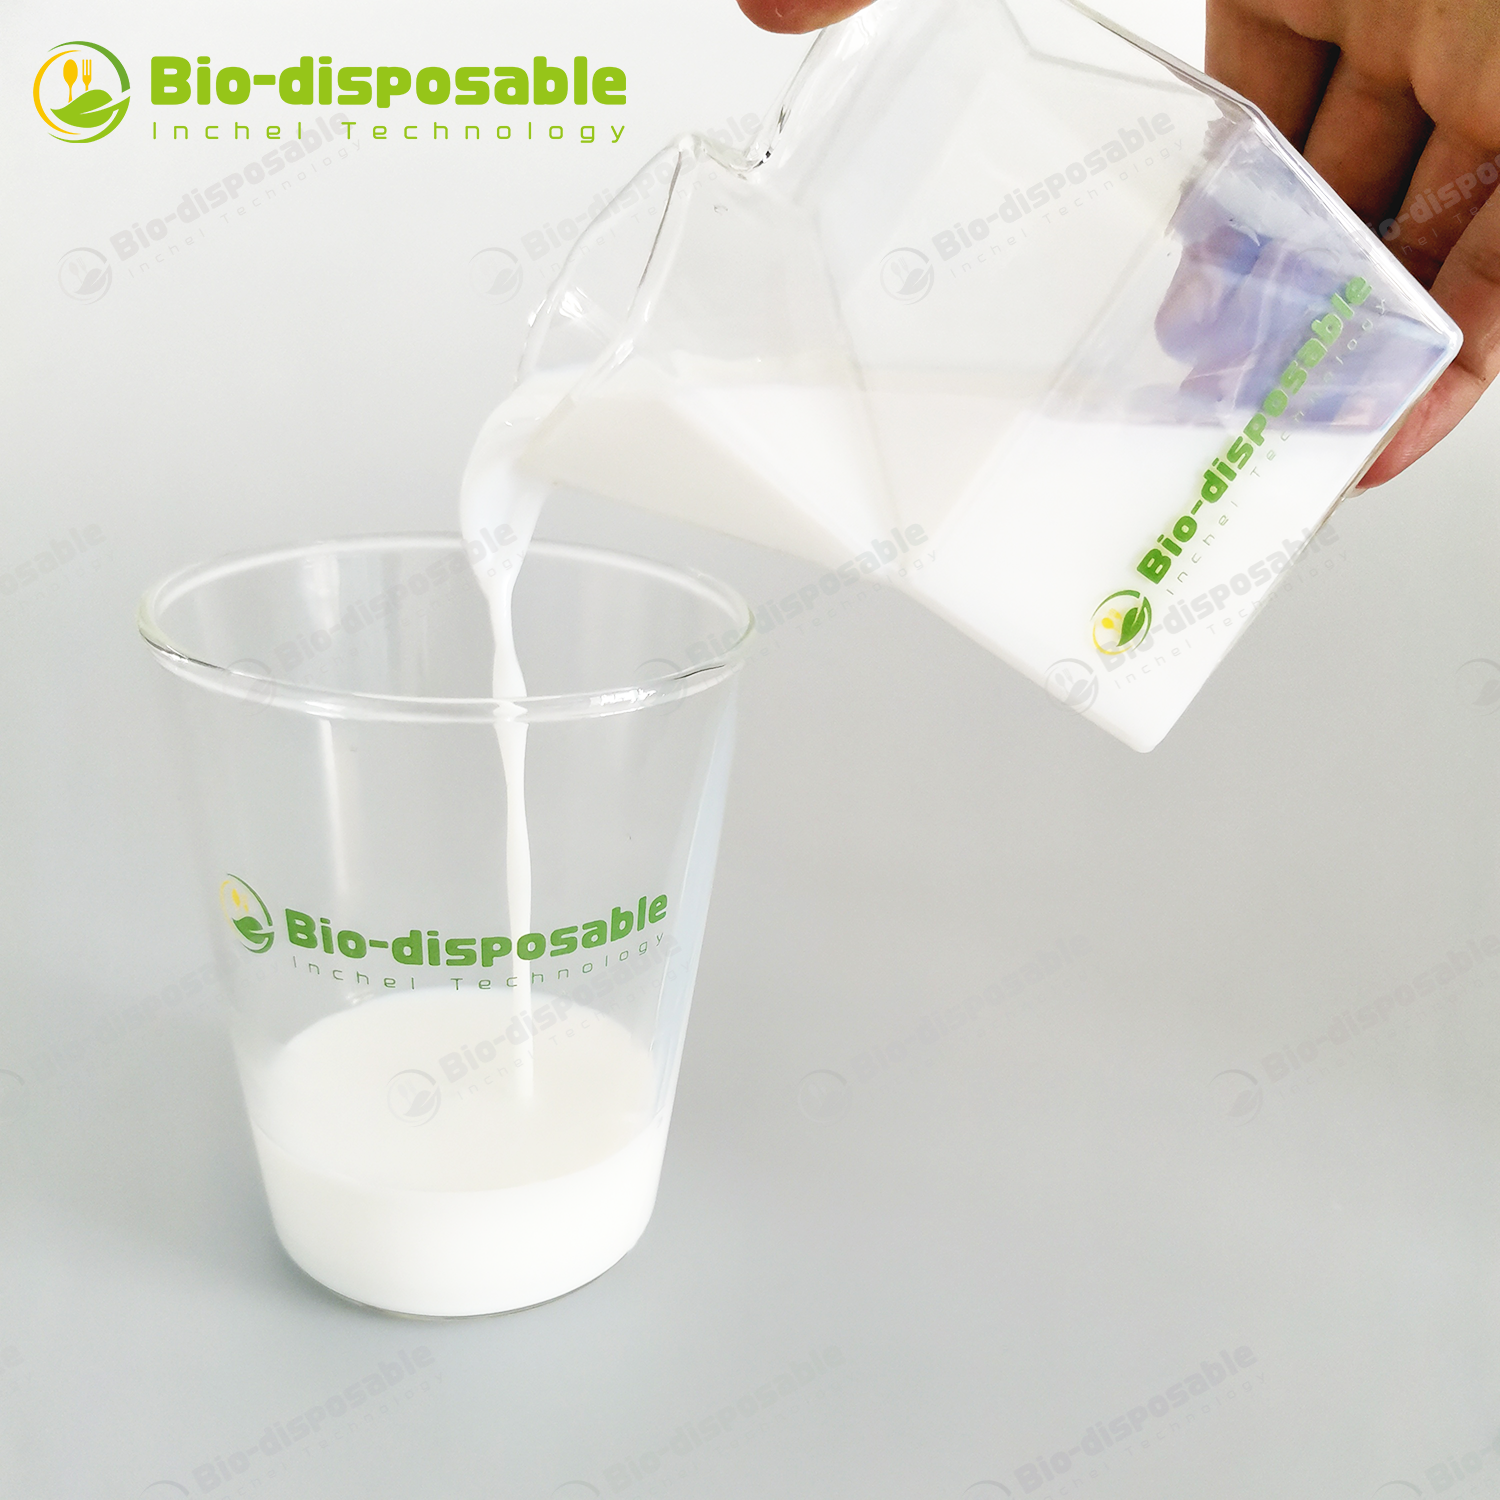 Biodegradable Coating